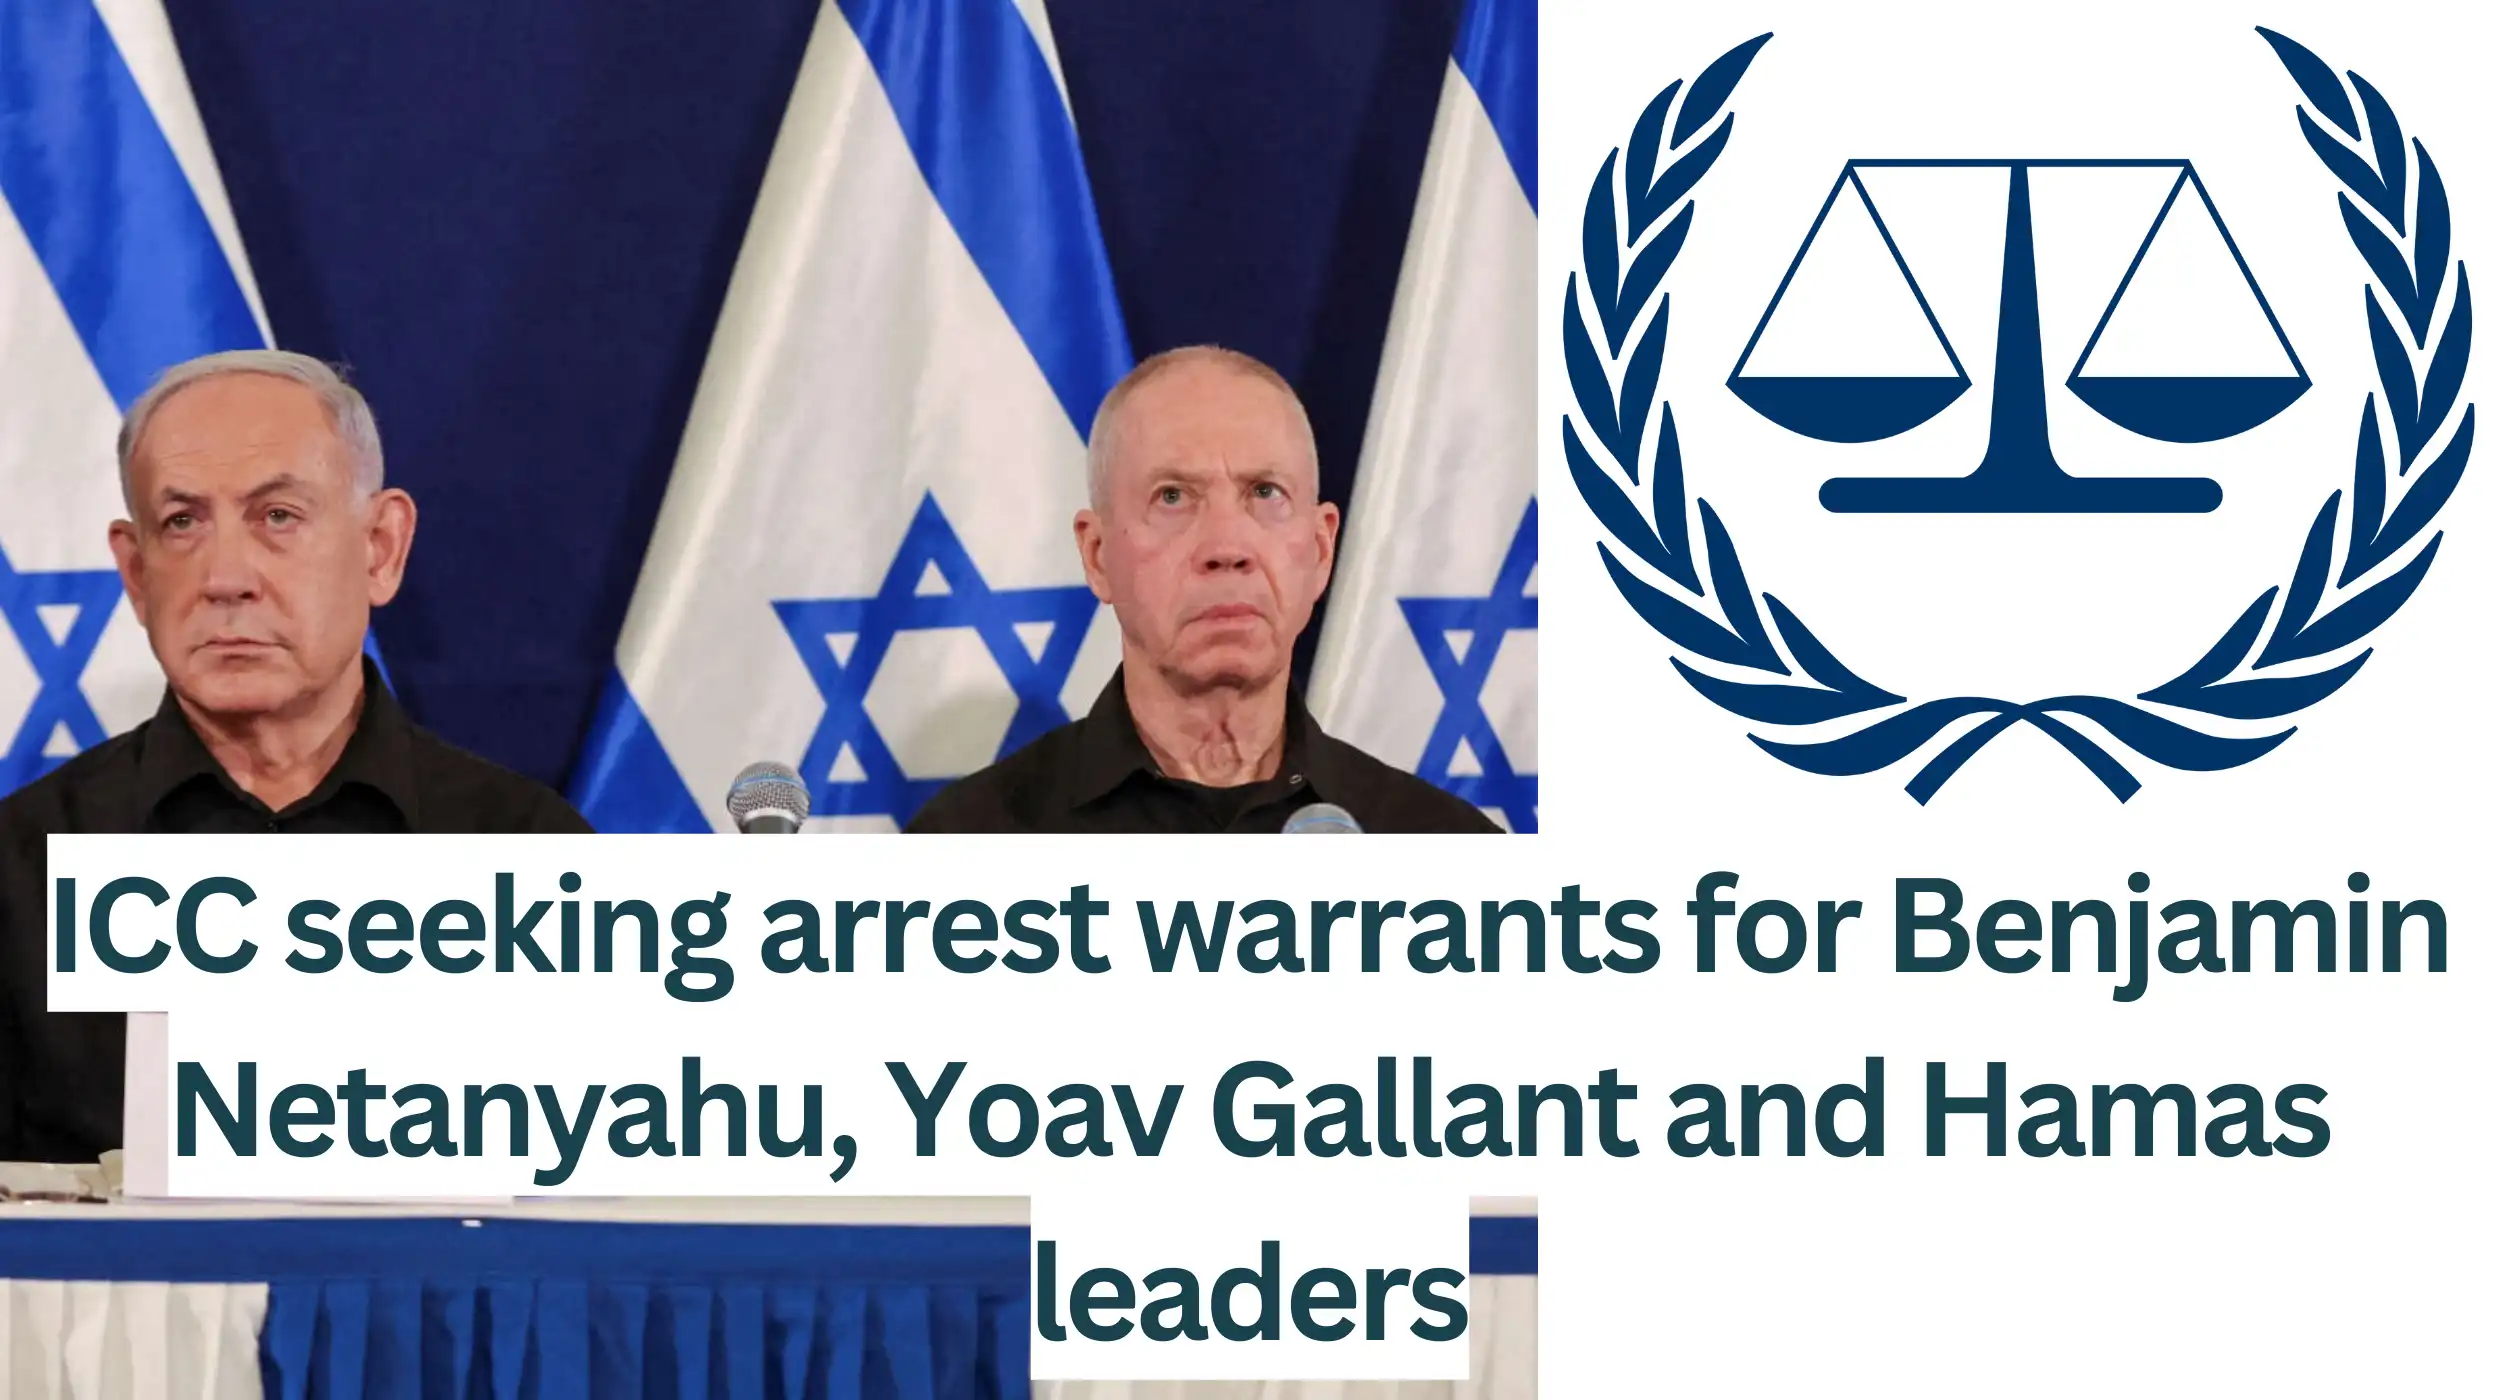 ICC-seeking-arrest-warrants-for-Benjamin-Netanyahu-Yoav-Gallant-and-Hamas-leaders